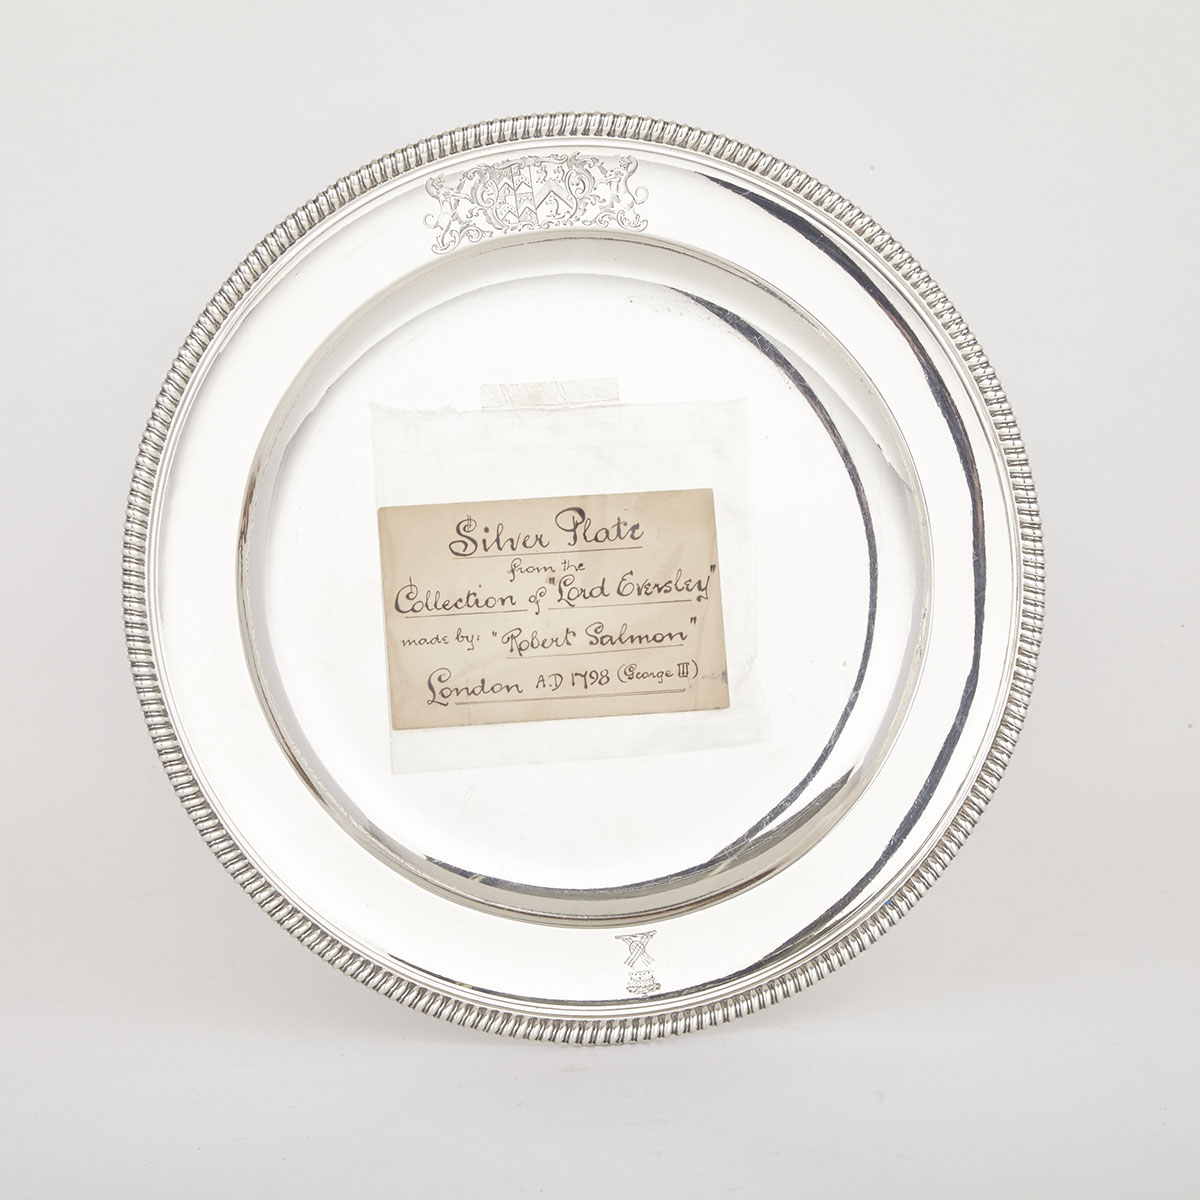 George III Silver Plate, Robert Sharp, London, 1758